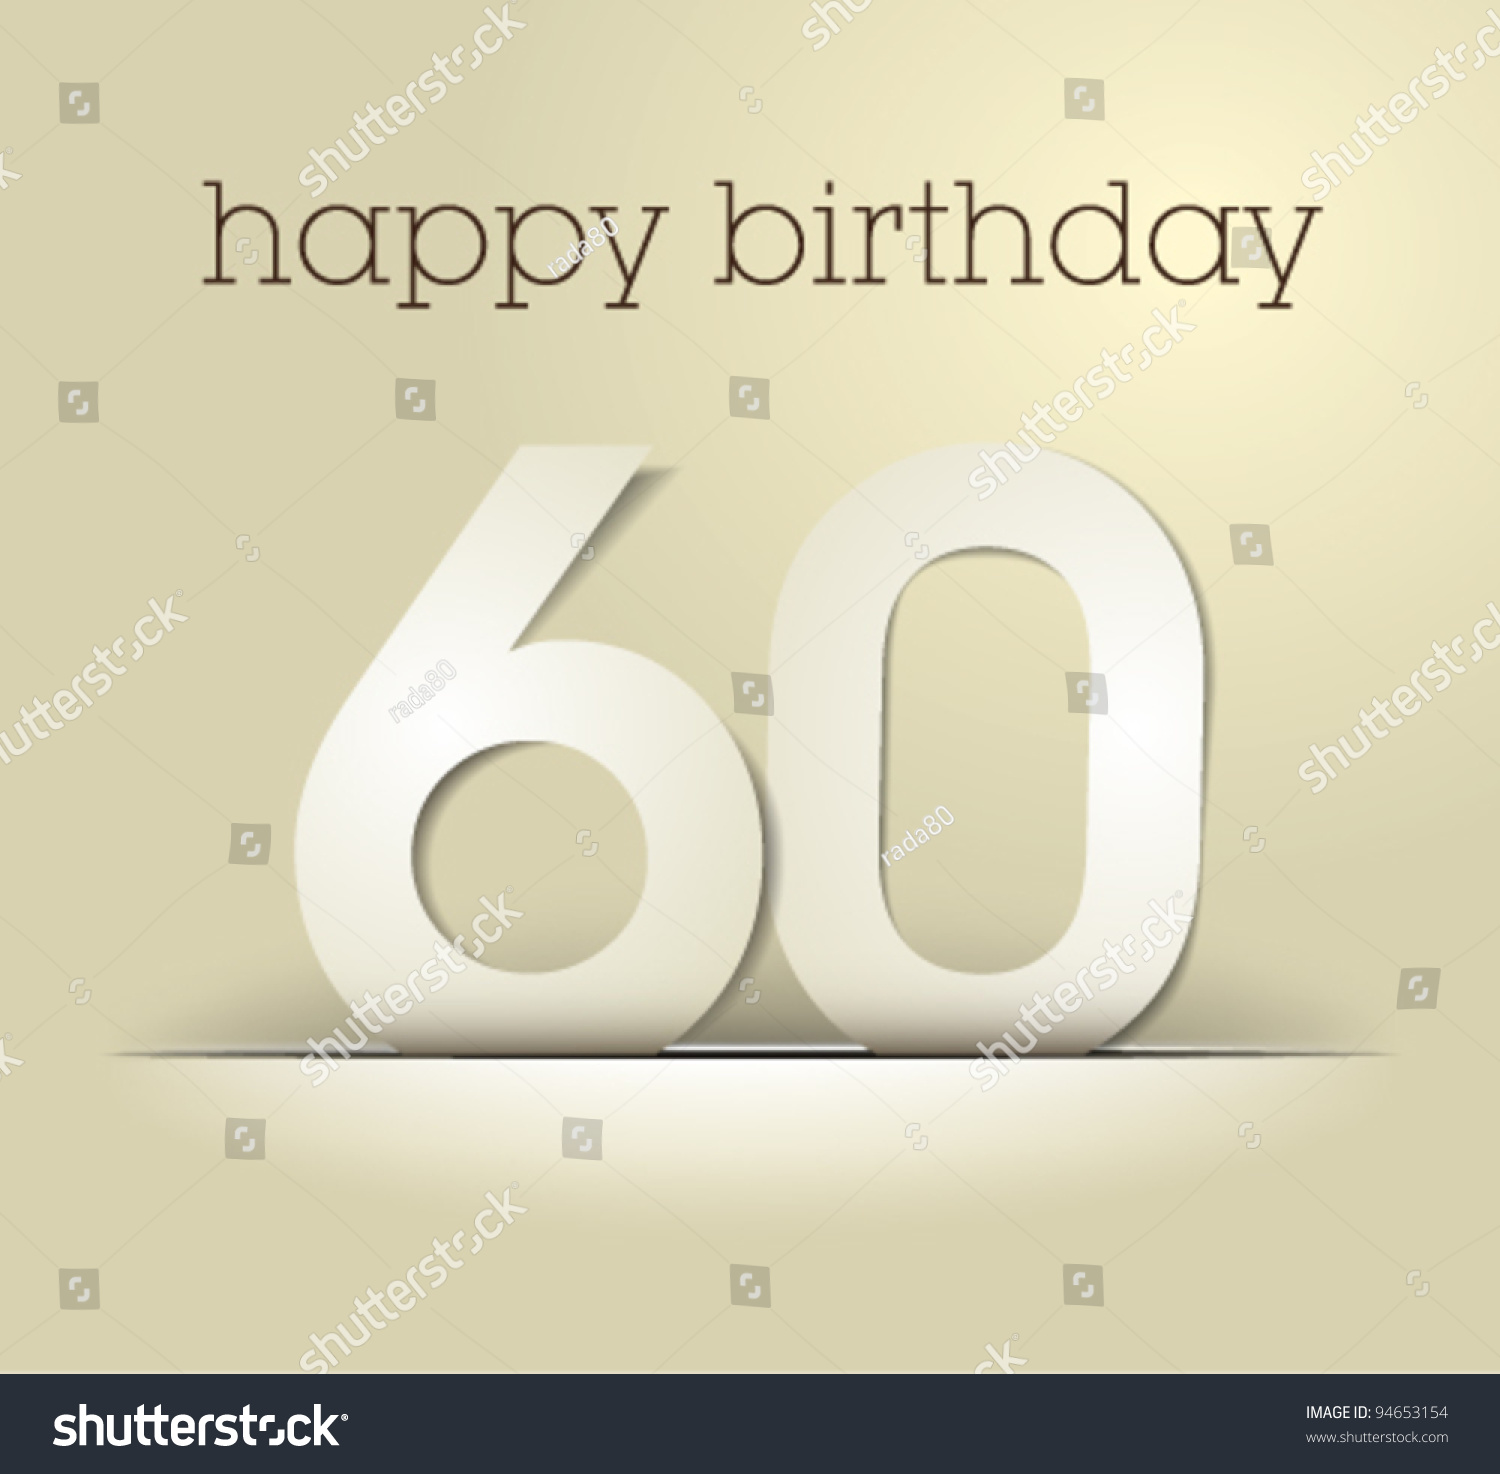 Number 60 Birthday Card Vector Simple Stock Vector 94653154 - Shutterstock